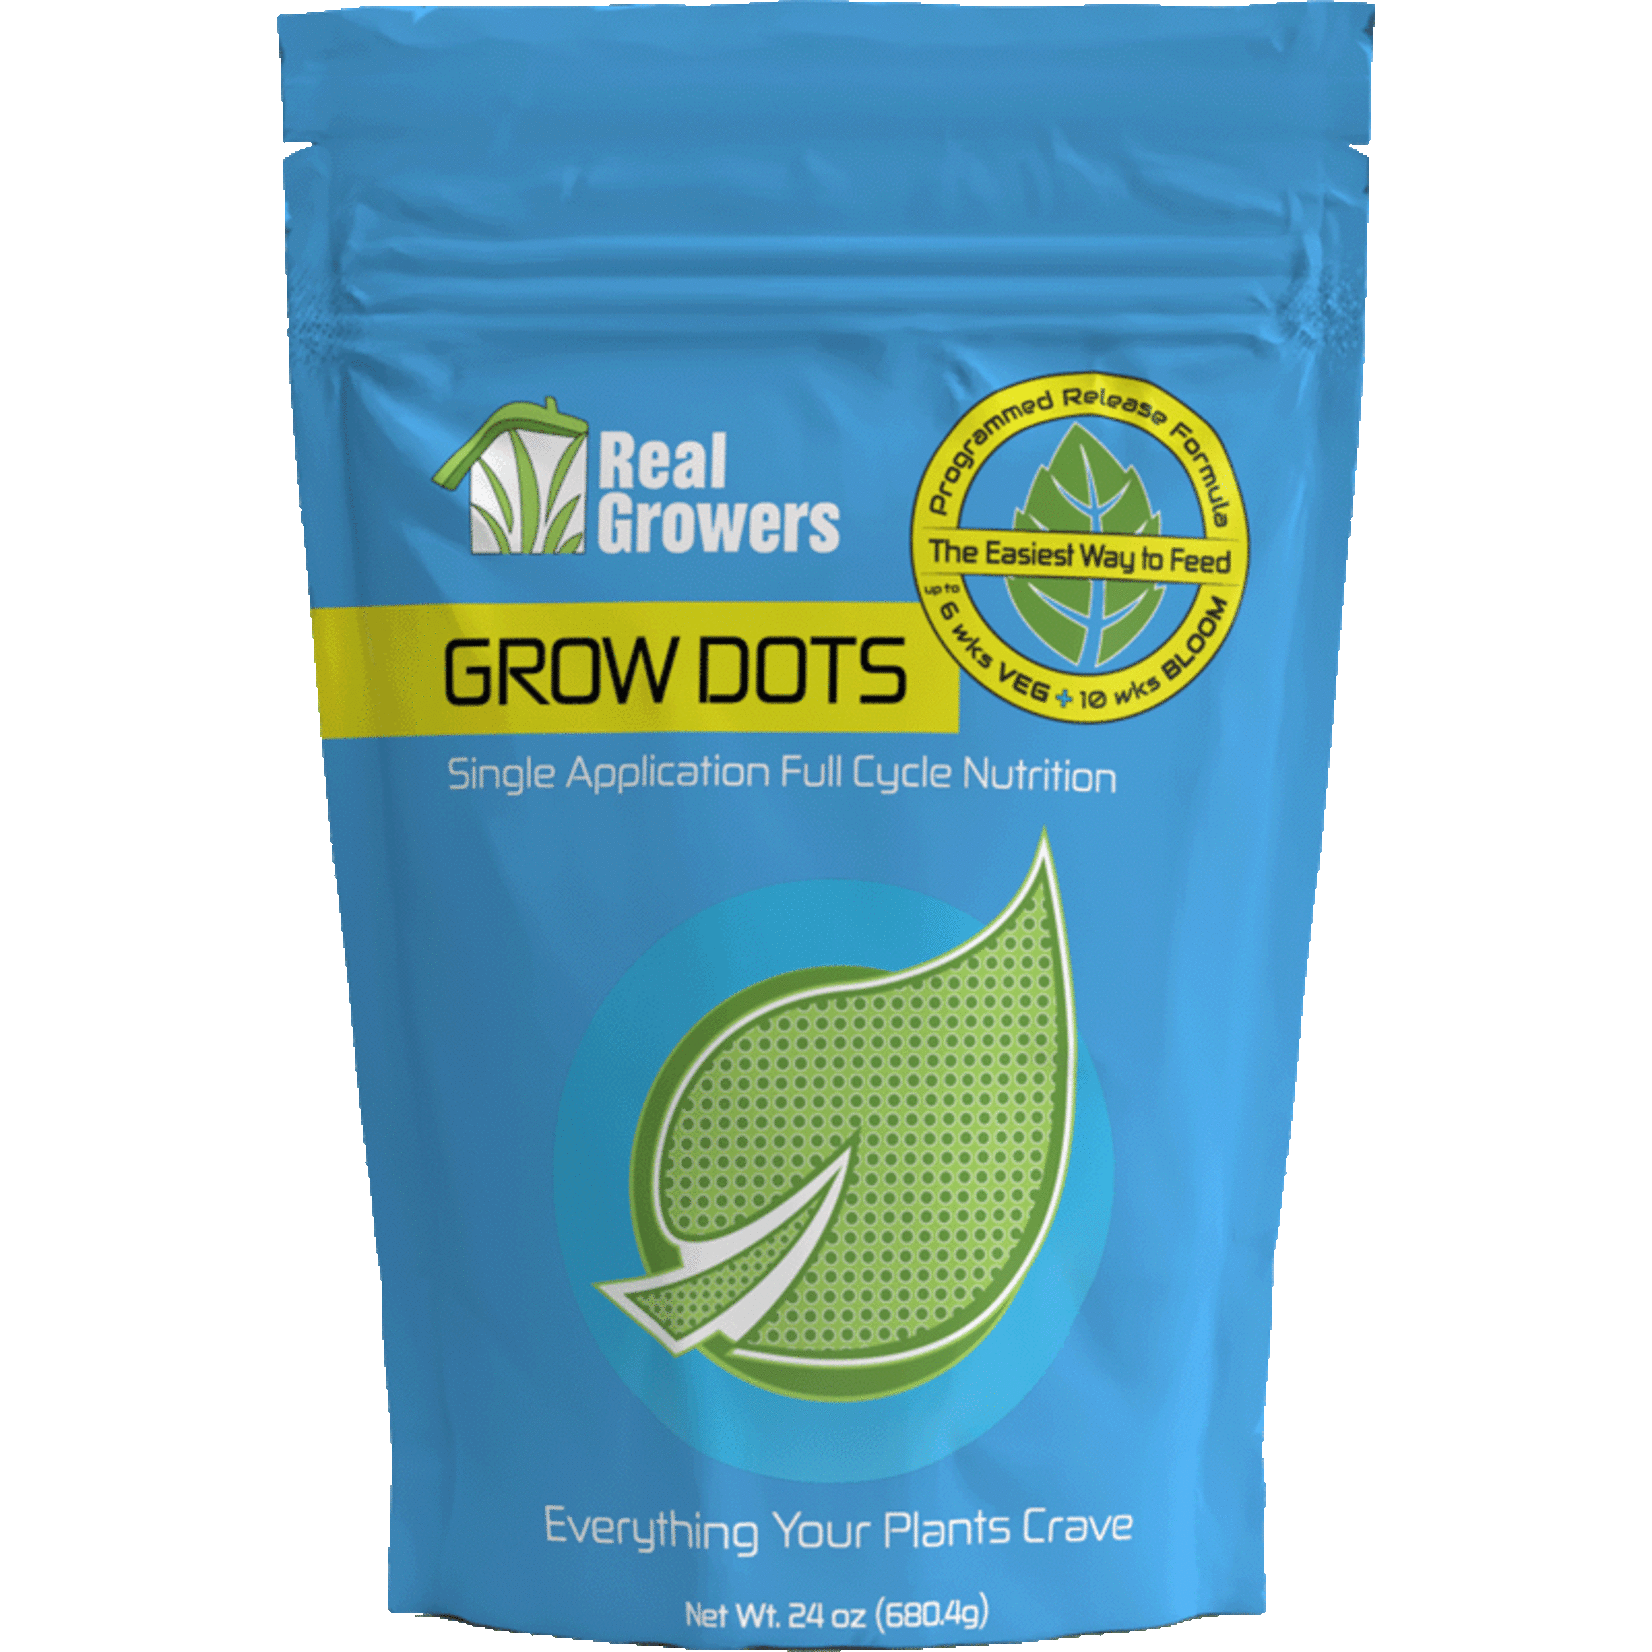 Real Growers Real Growers Grow Dots, 24 oz